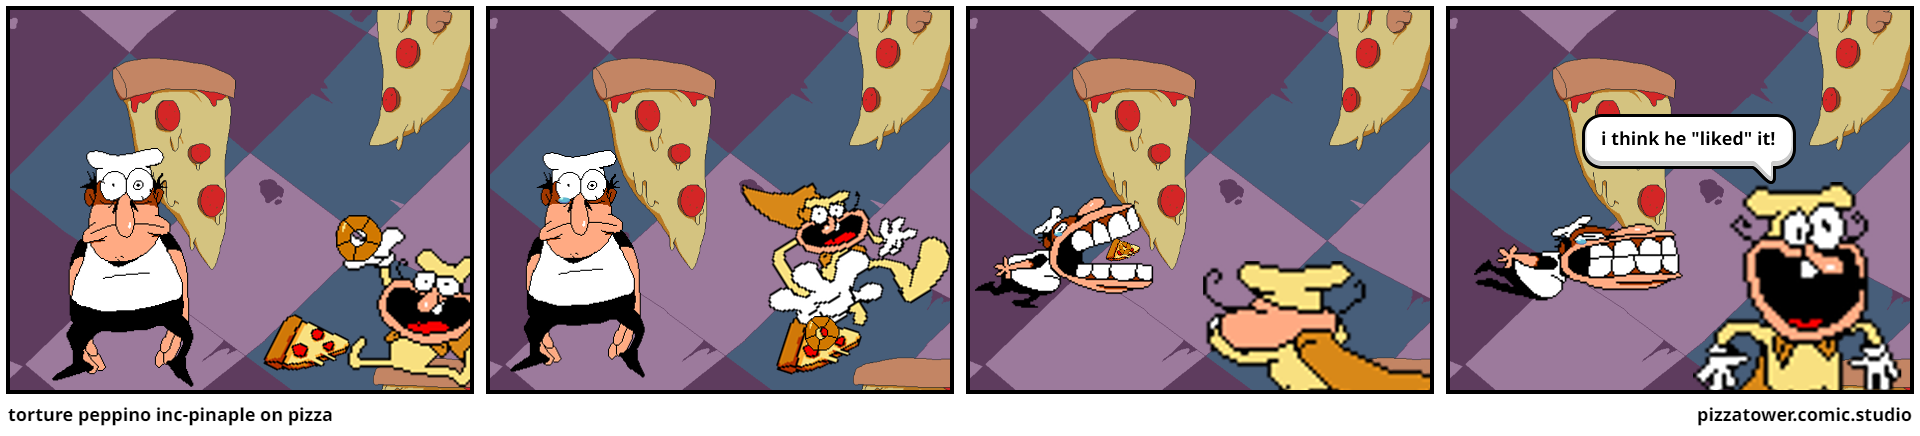 torture peppino inc-pinaple on pizza